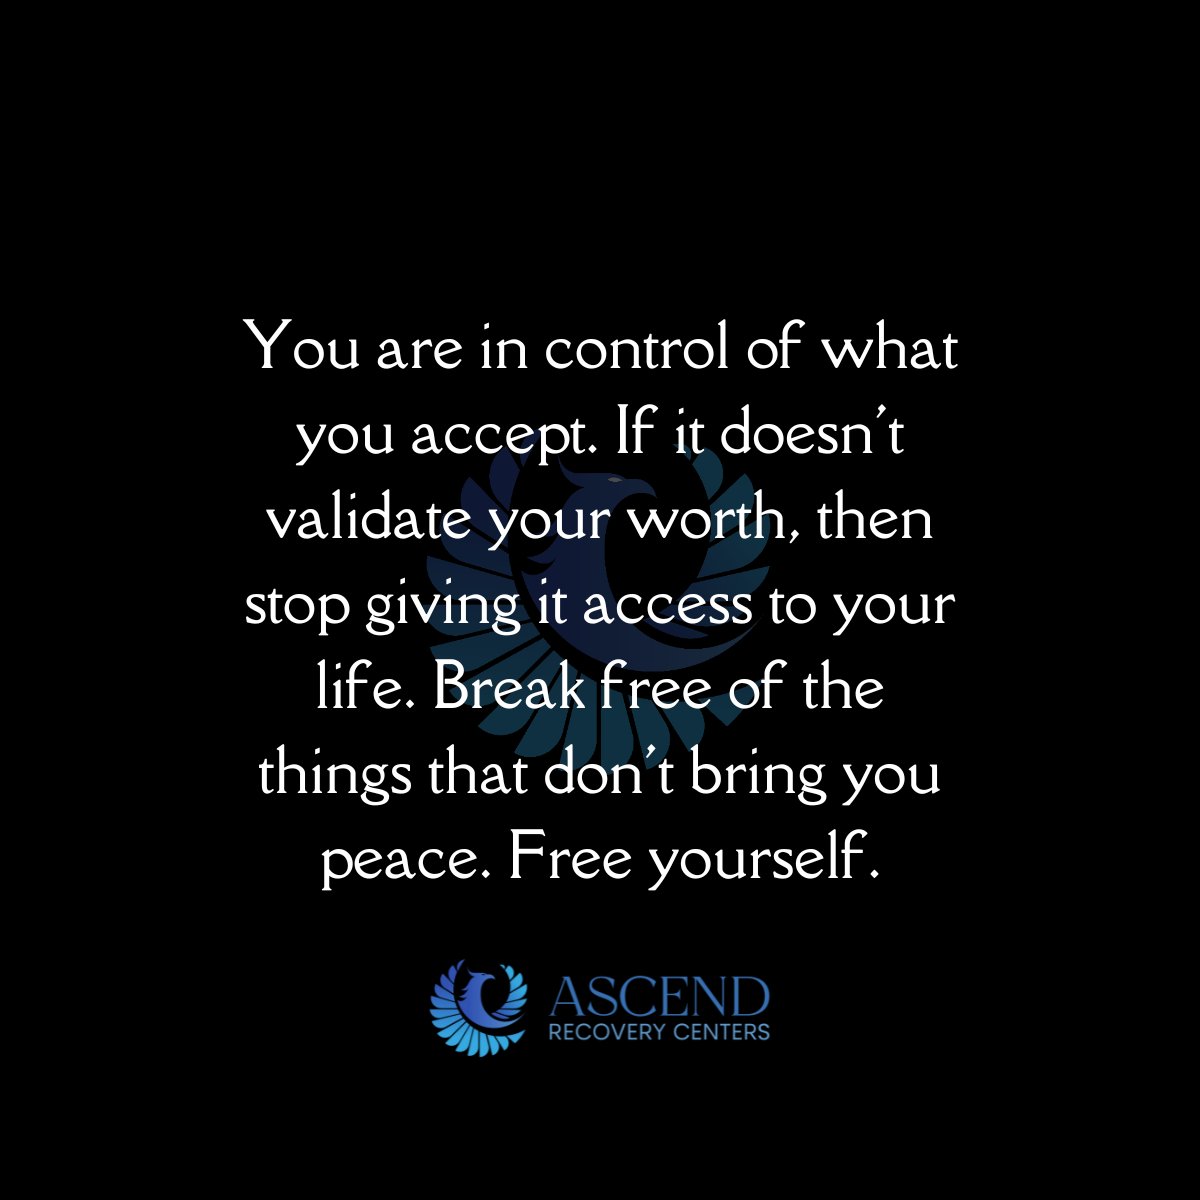 Free yourself...💙
#recoveryisfreedom #addictedtochange #wedorecover #peace #serenity #soberlife #ascending #acceptance #sobermovement #RecoveryPosse